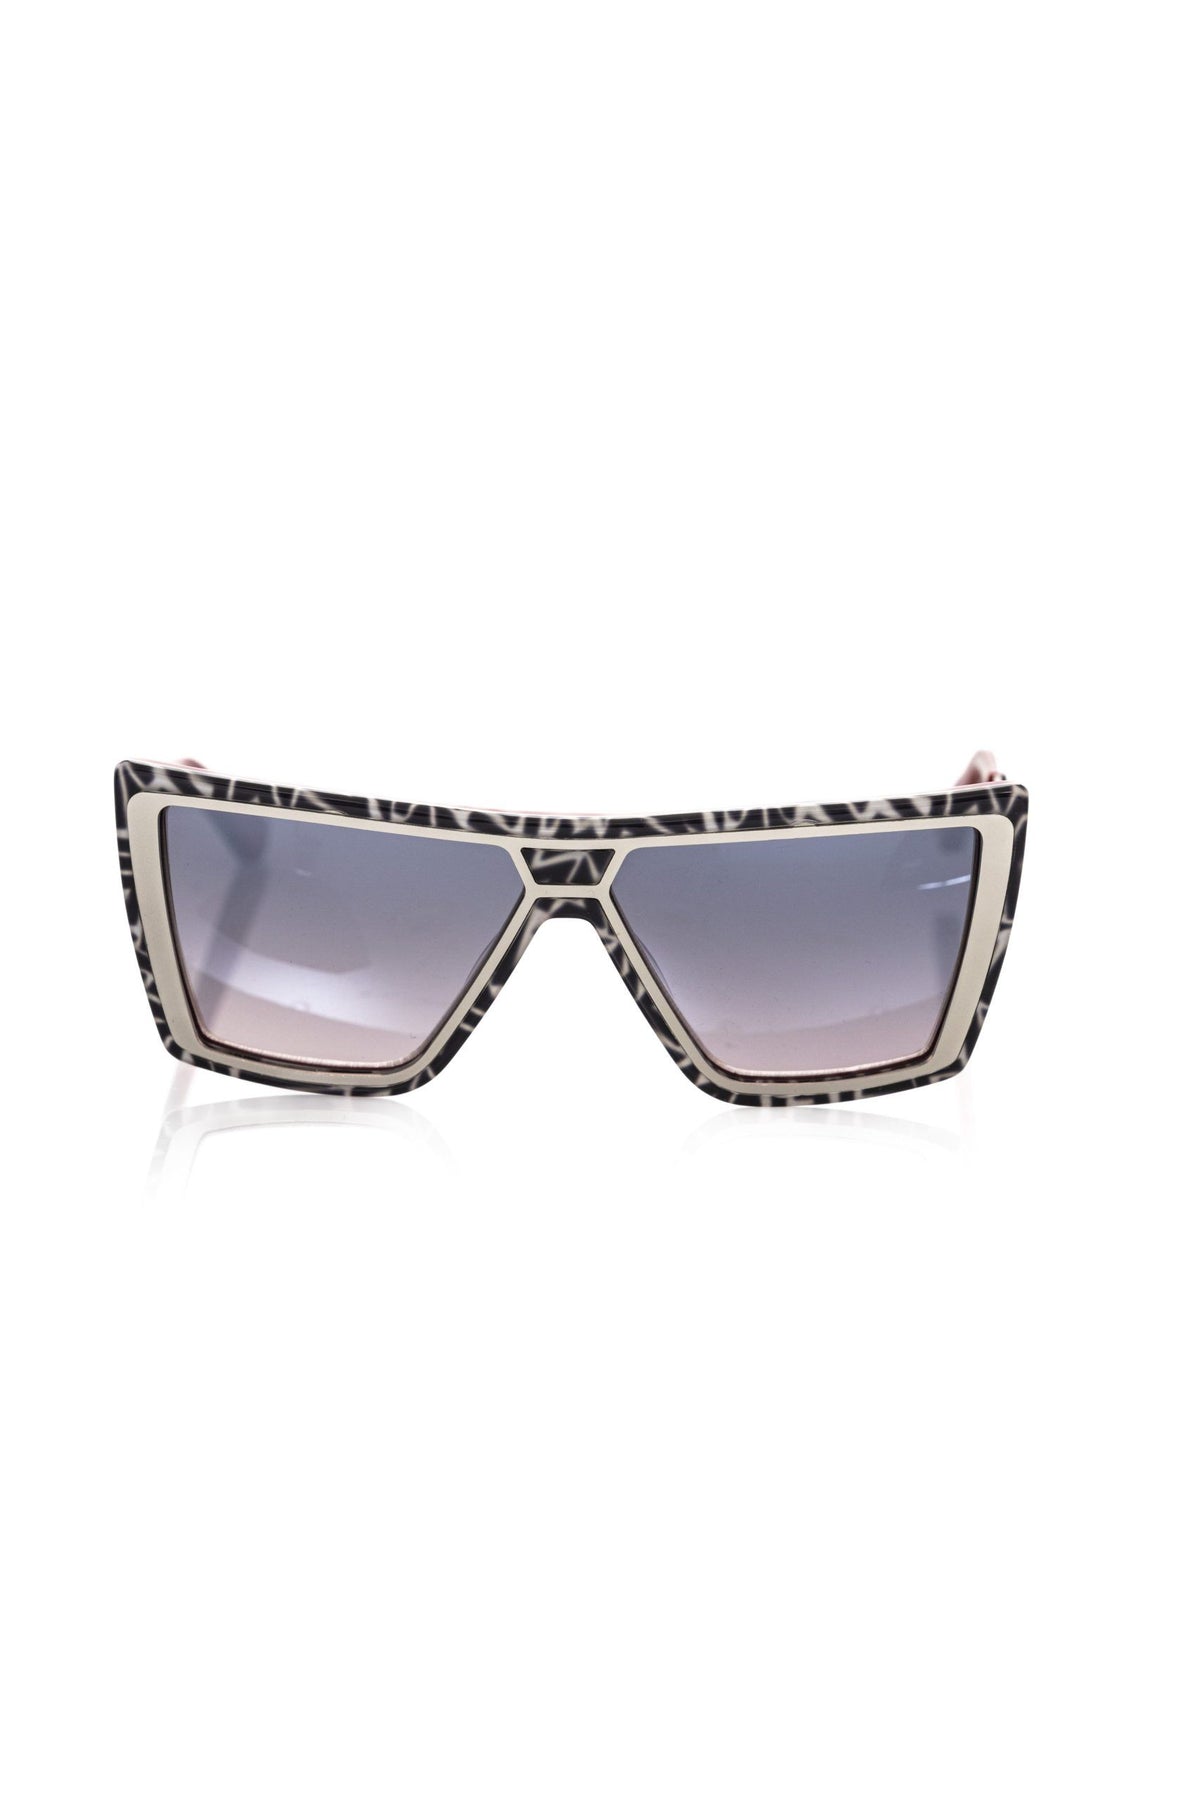 Frankie Morello Chic Zebra Pattern Square Sunglasses